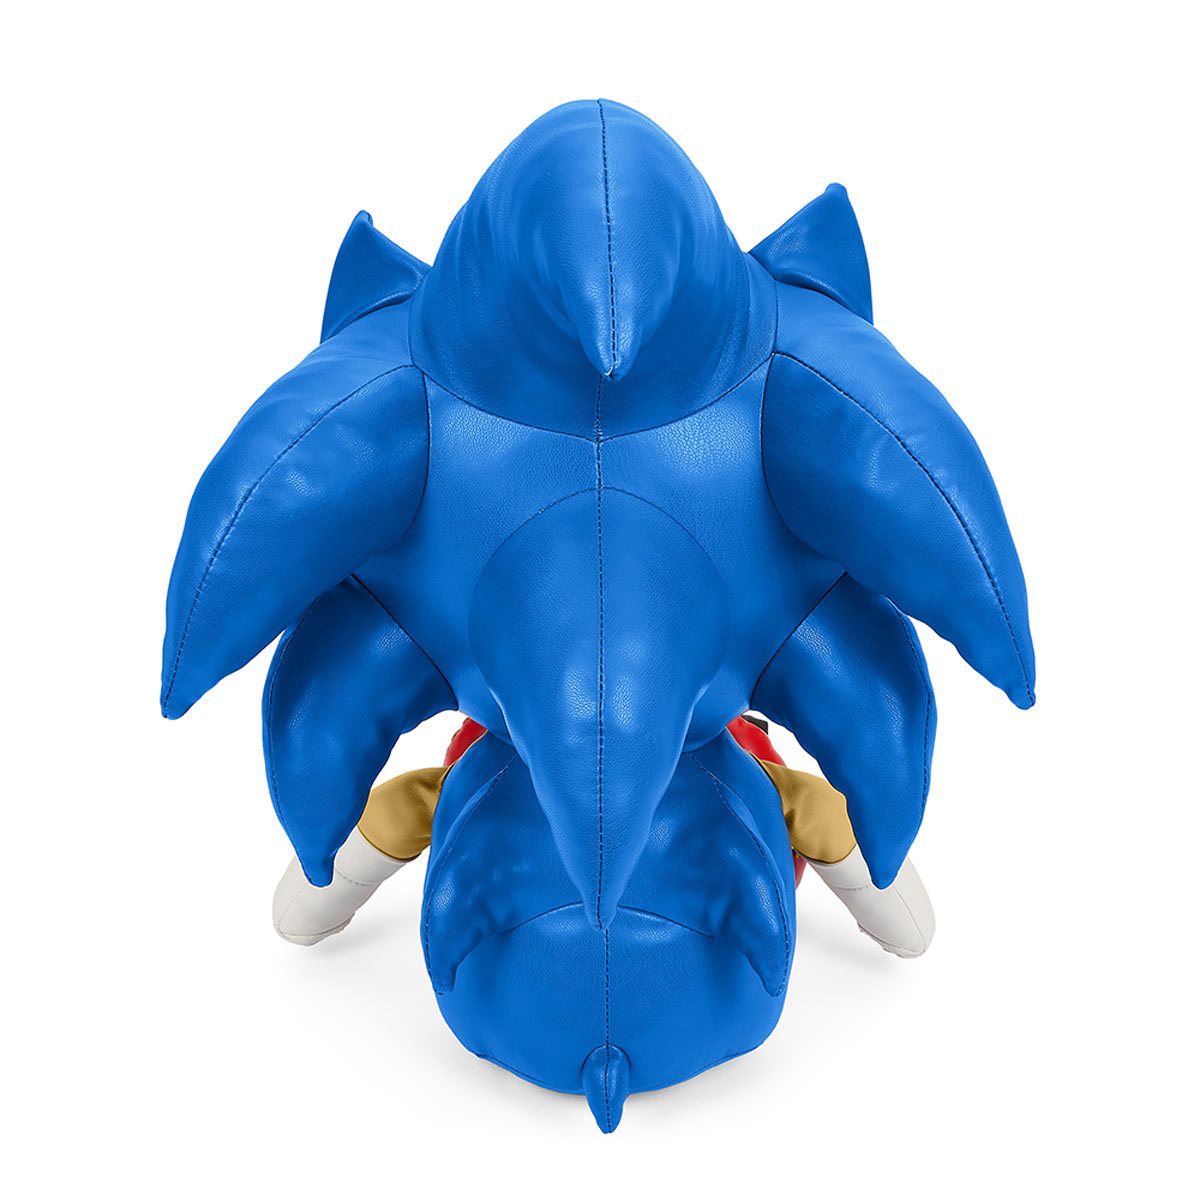 Sonic the Hedgehog 16” Premium Pleather Tails Plush - Kidrobot